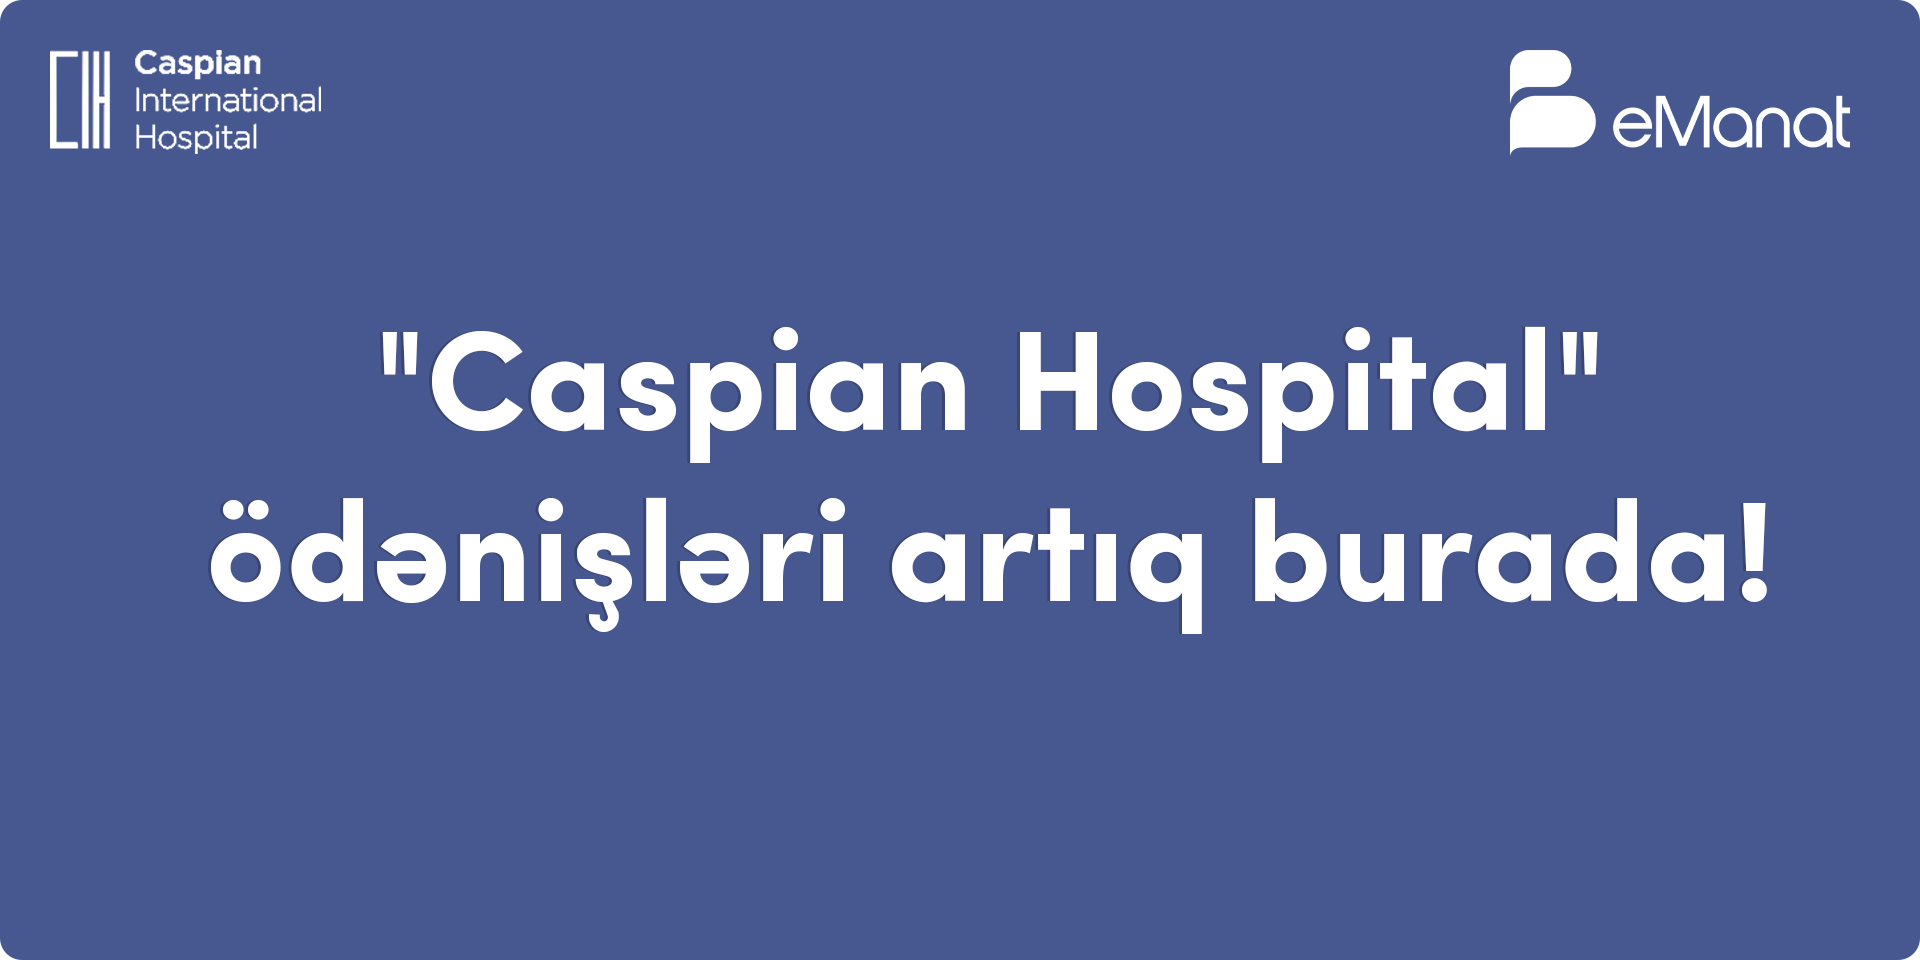 "caspian-hospital"-in-emanat!